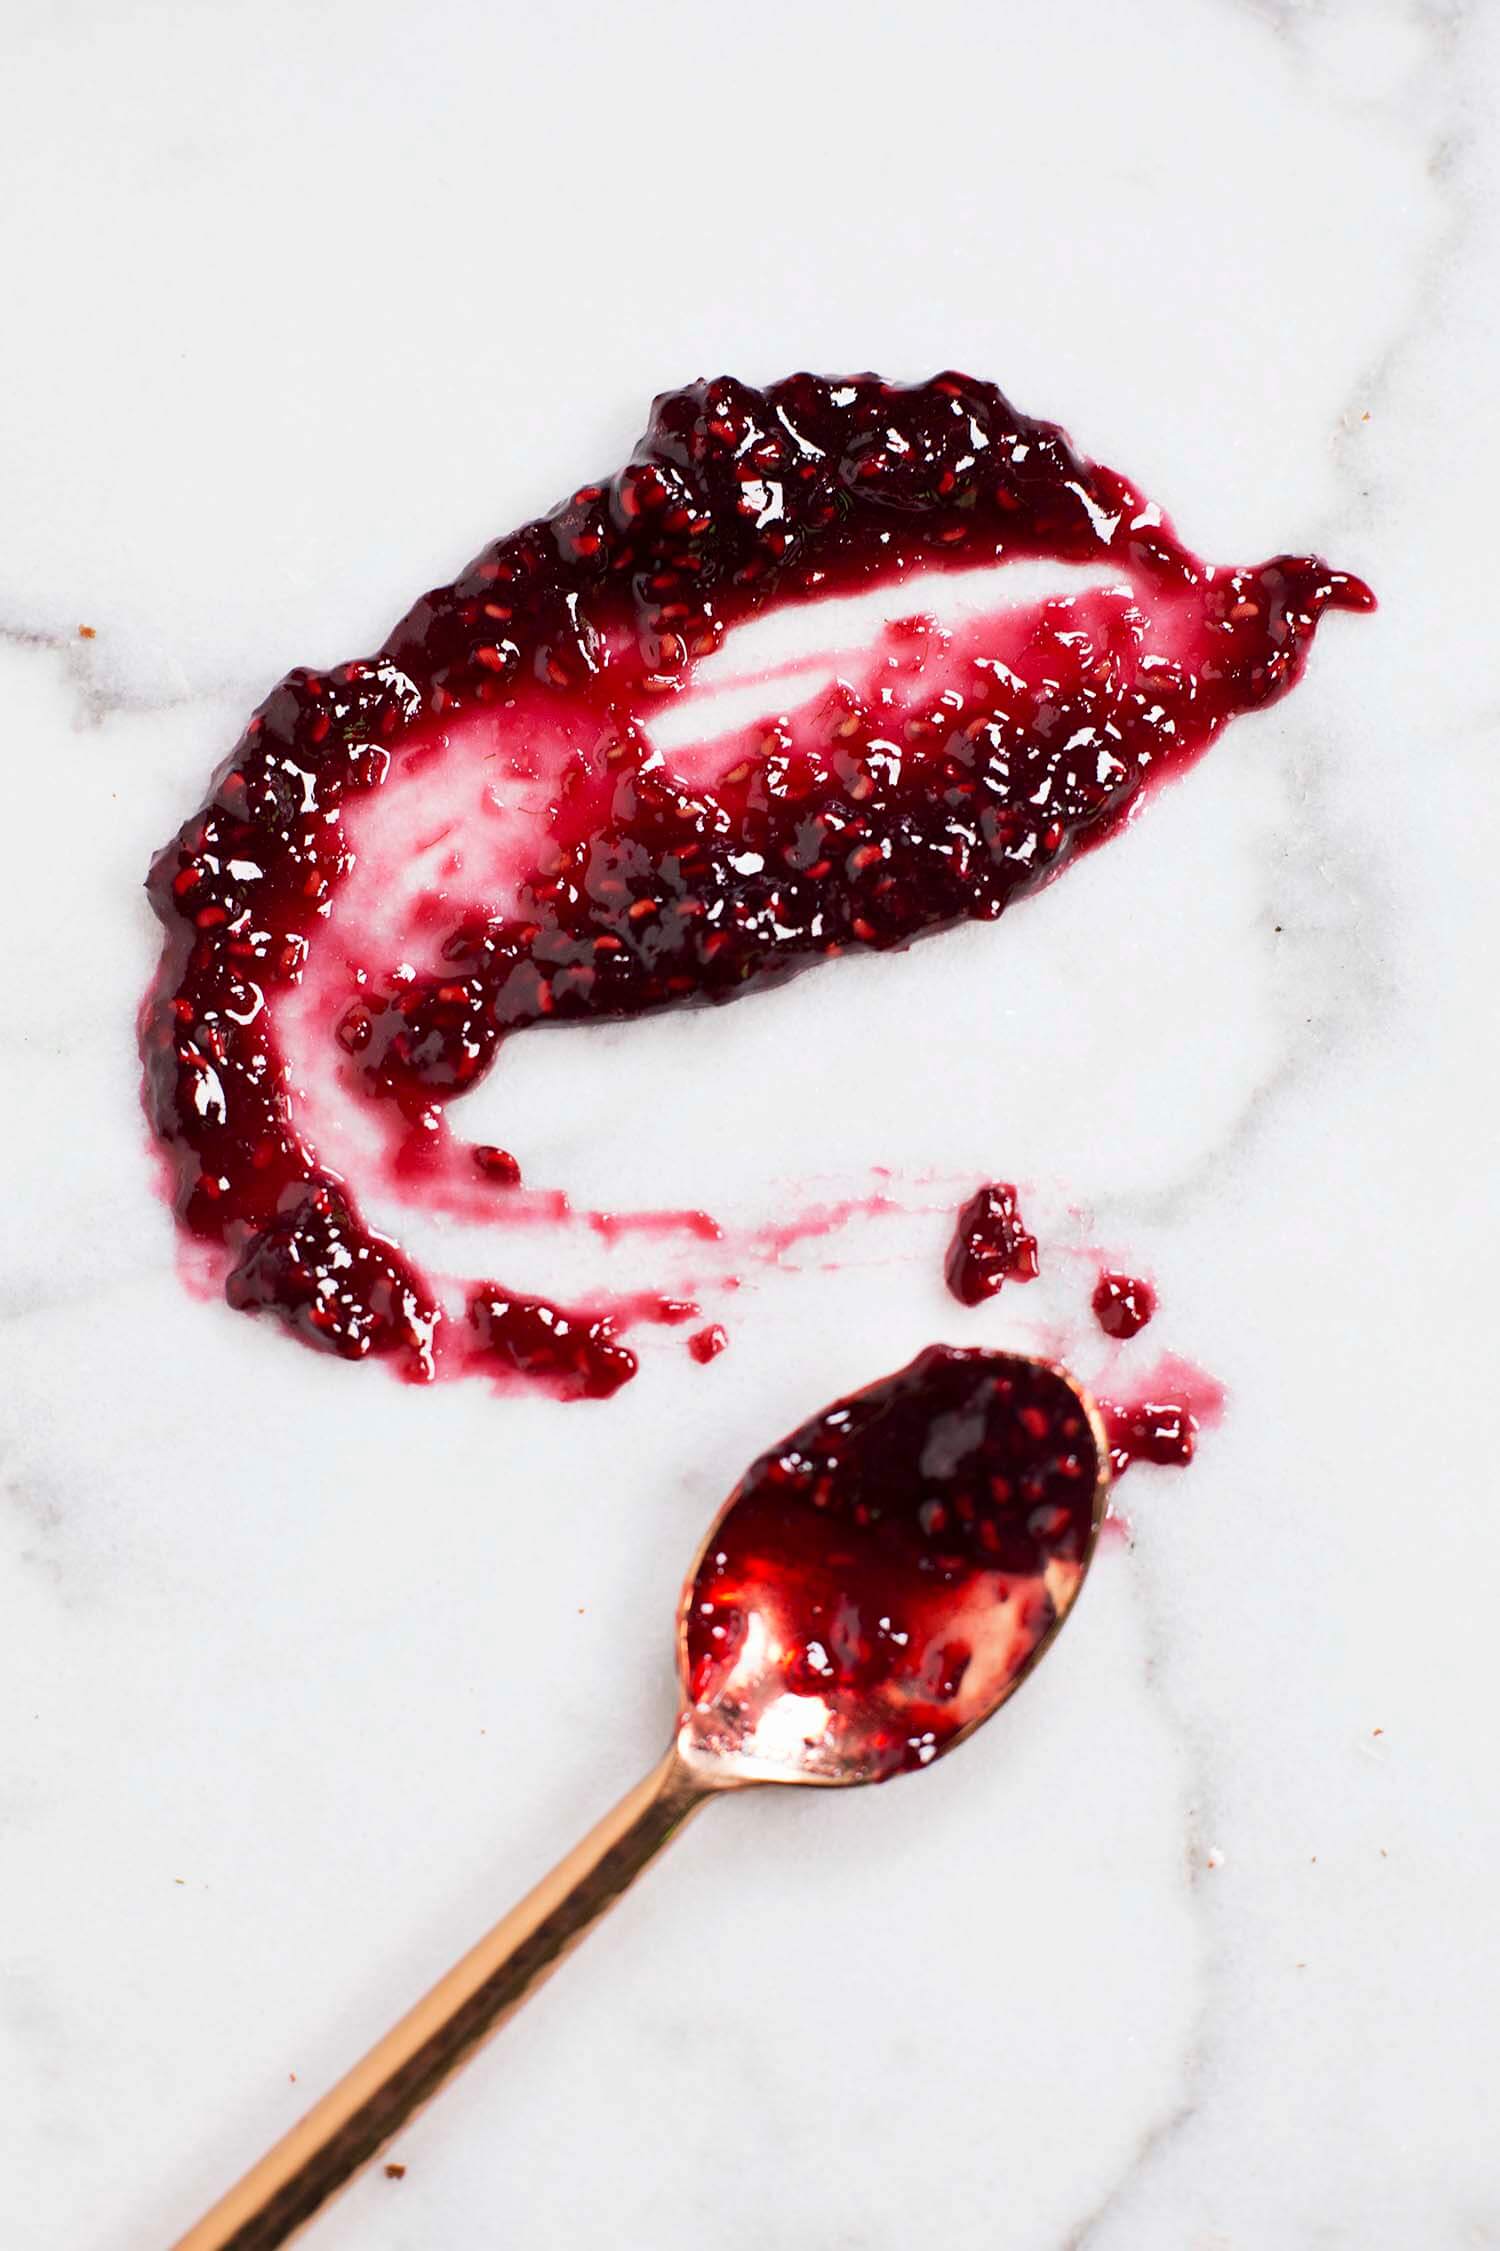 Red wine and raspberry jam (via abeautifulmess.com)